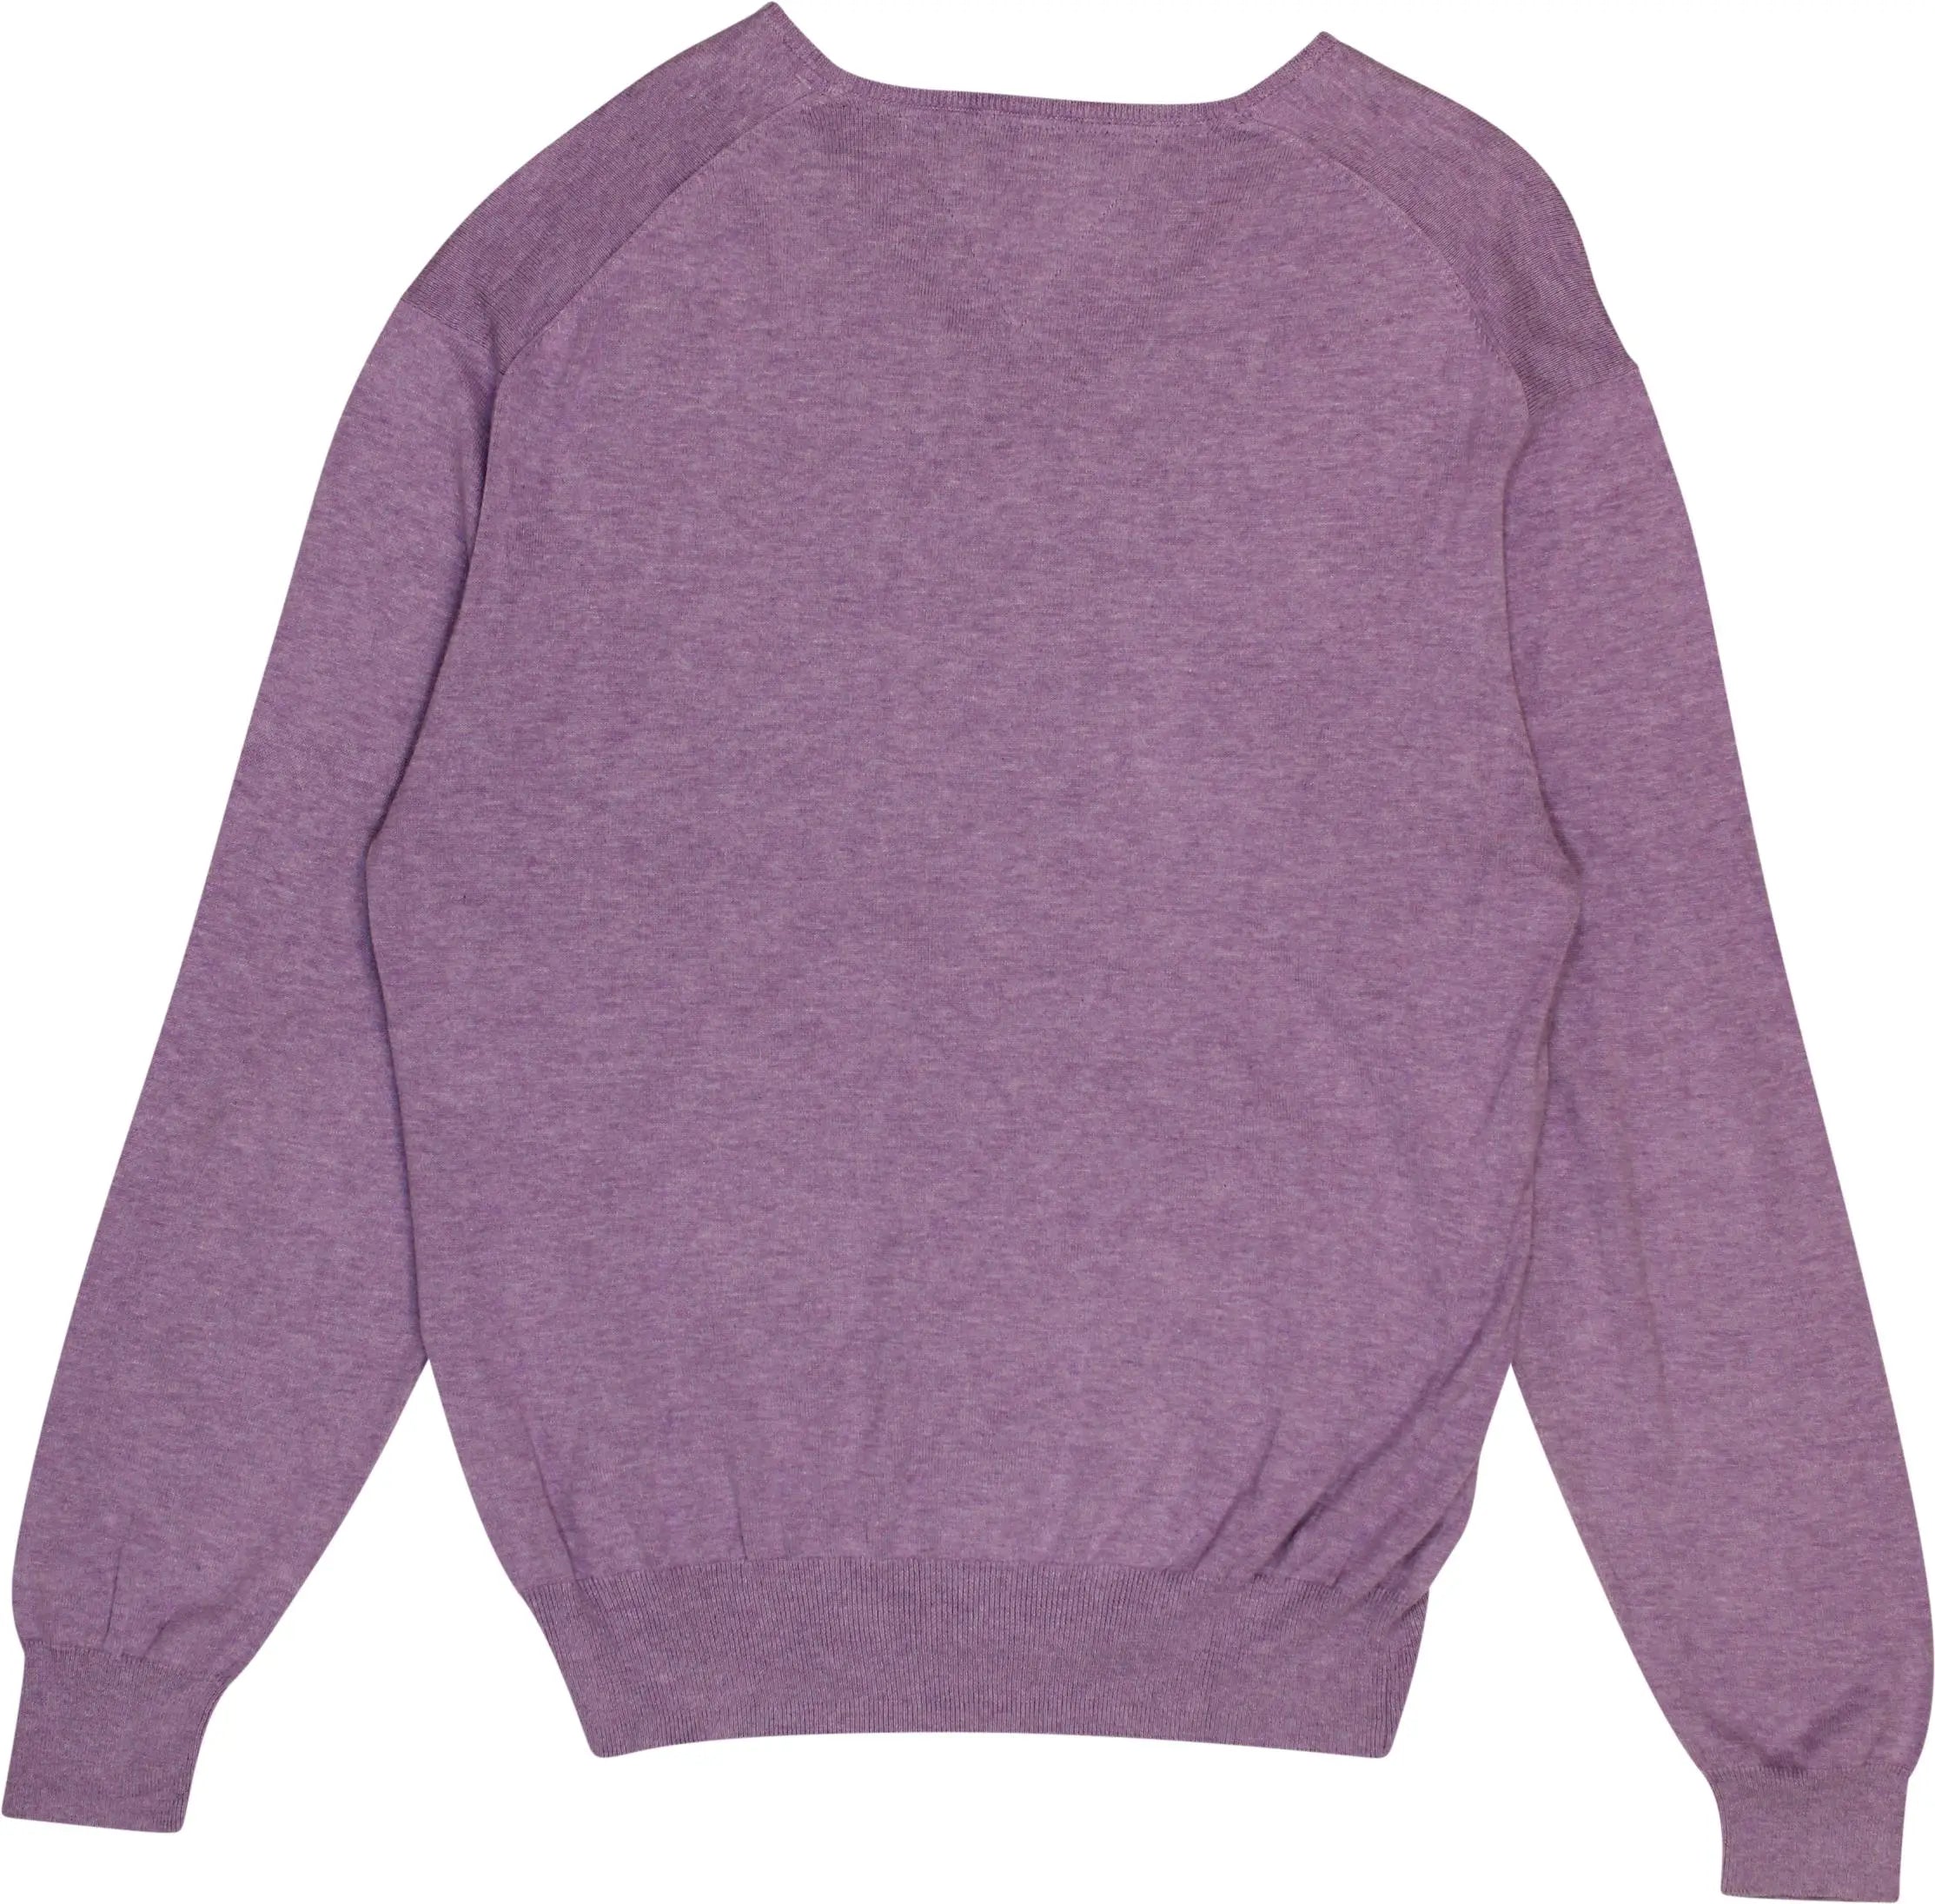 Cavallaro - Purple Jumper- ThriftTale.com - Vintage and second handclothing